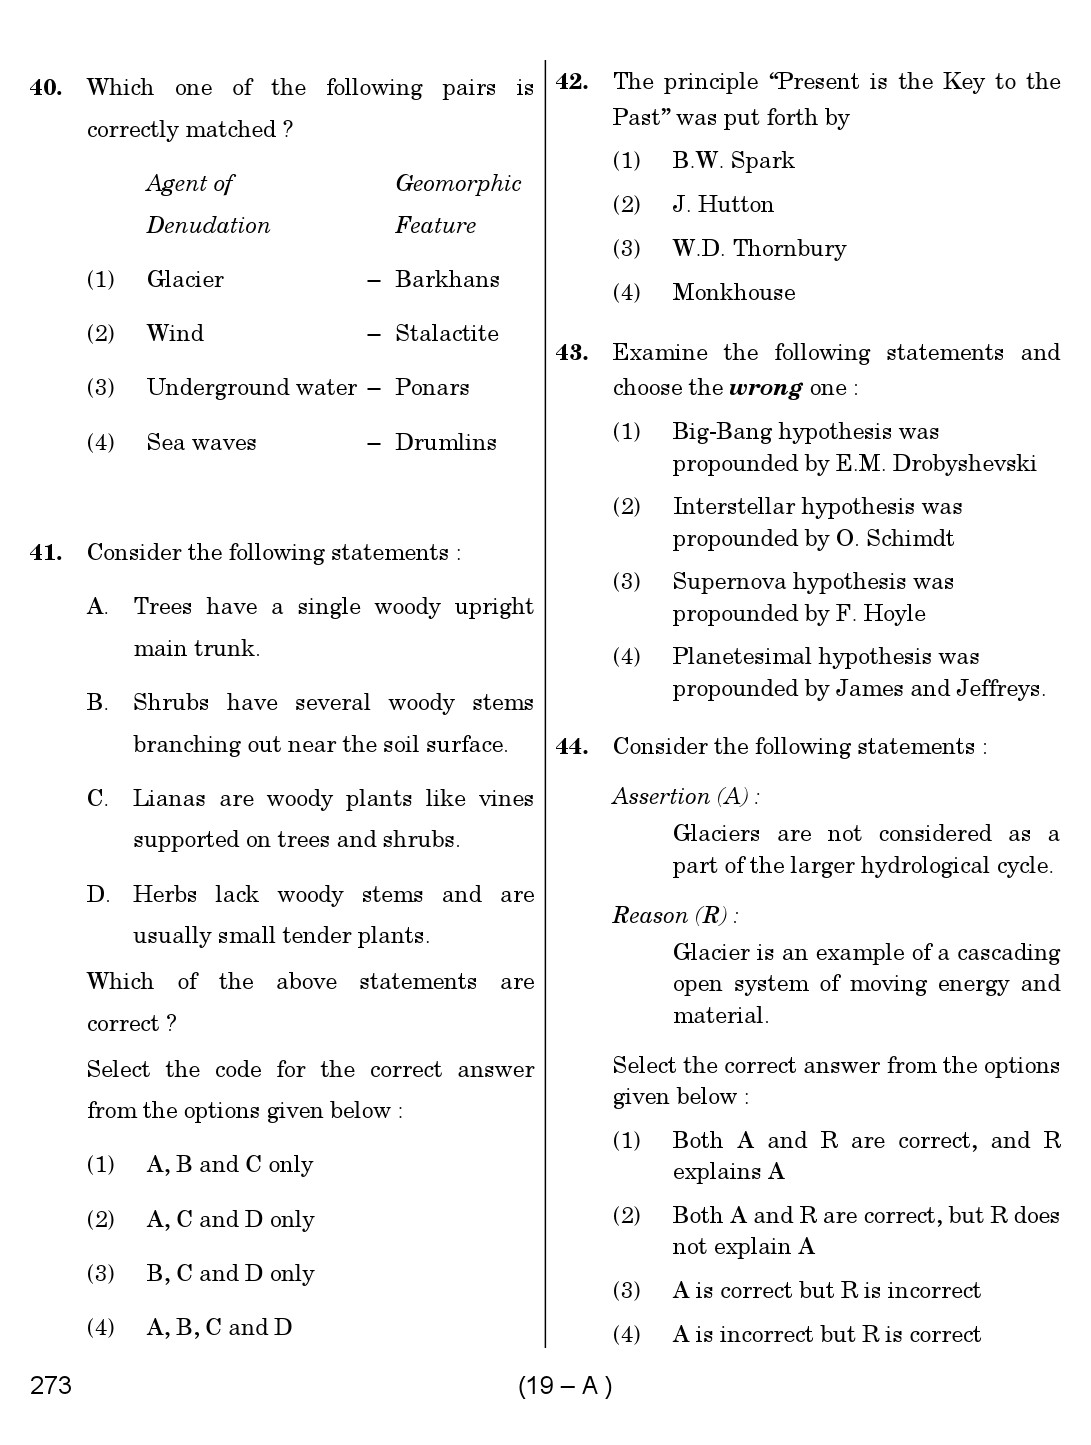 Karnataka PSC Social Science Teacher Exam Sample Question Paper Subject code 273 19